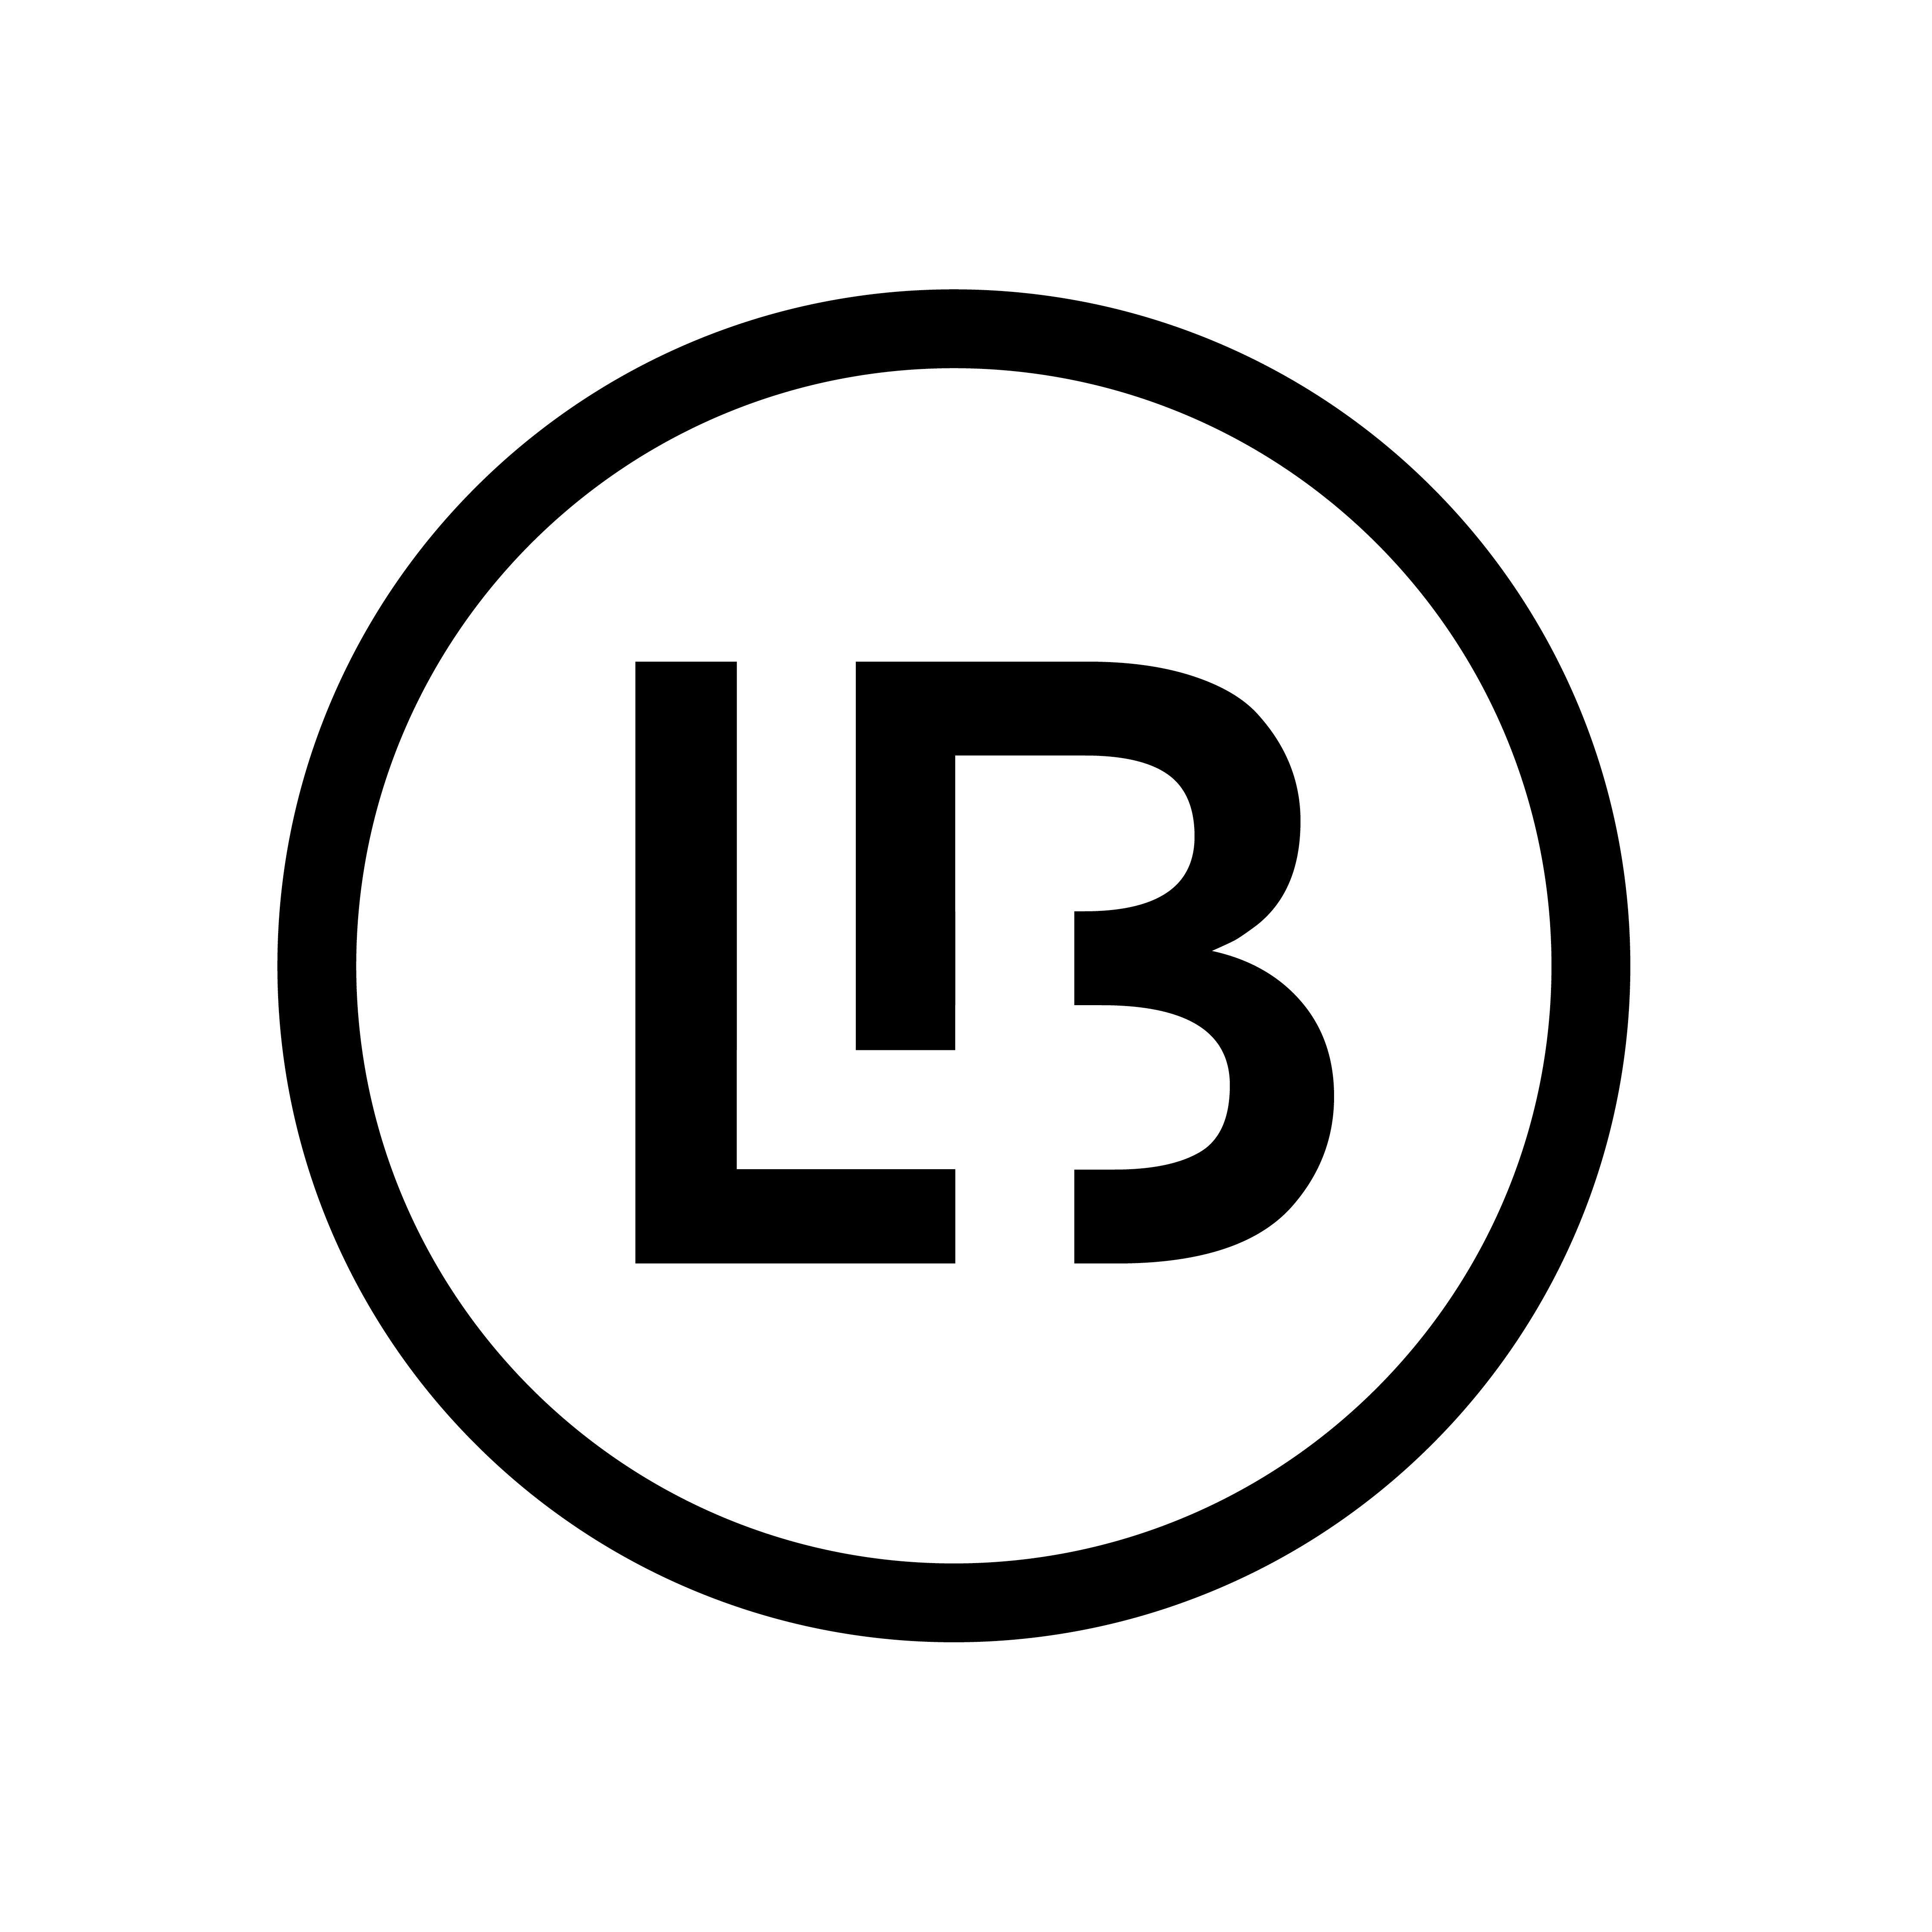 Lb Logo - logo. Logos, Initials logo, Lb logo